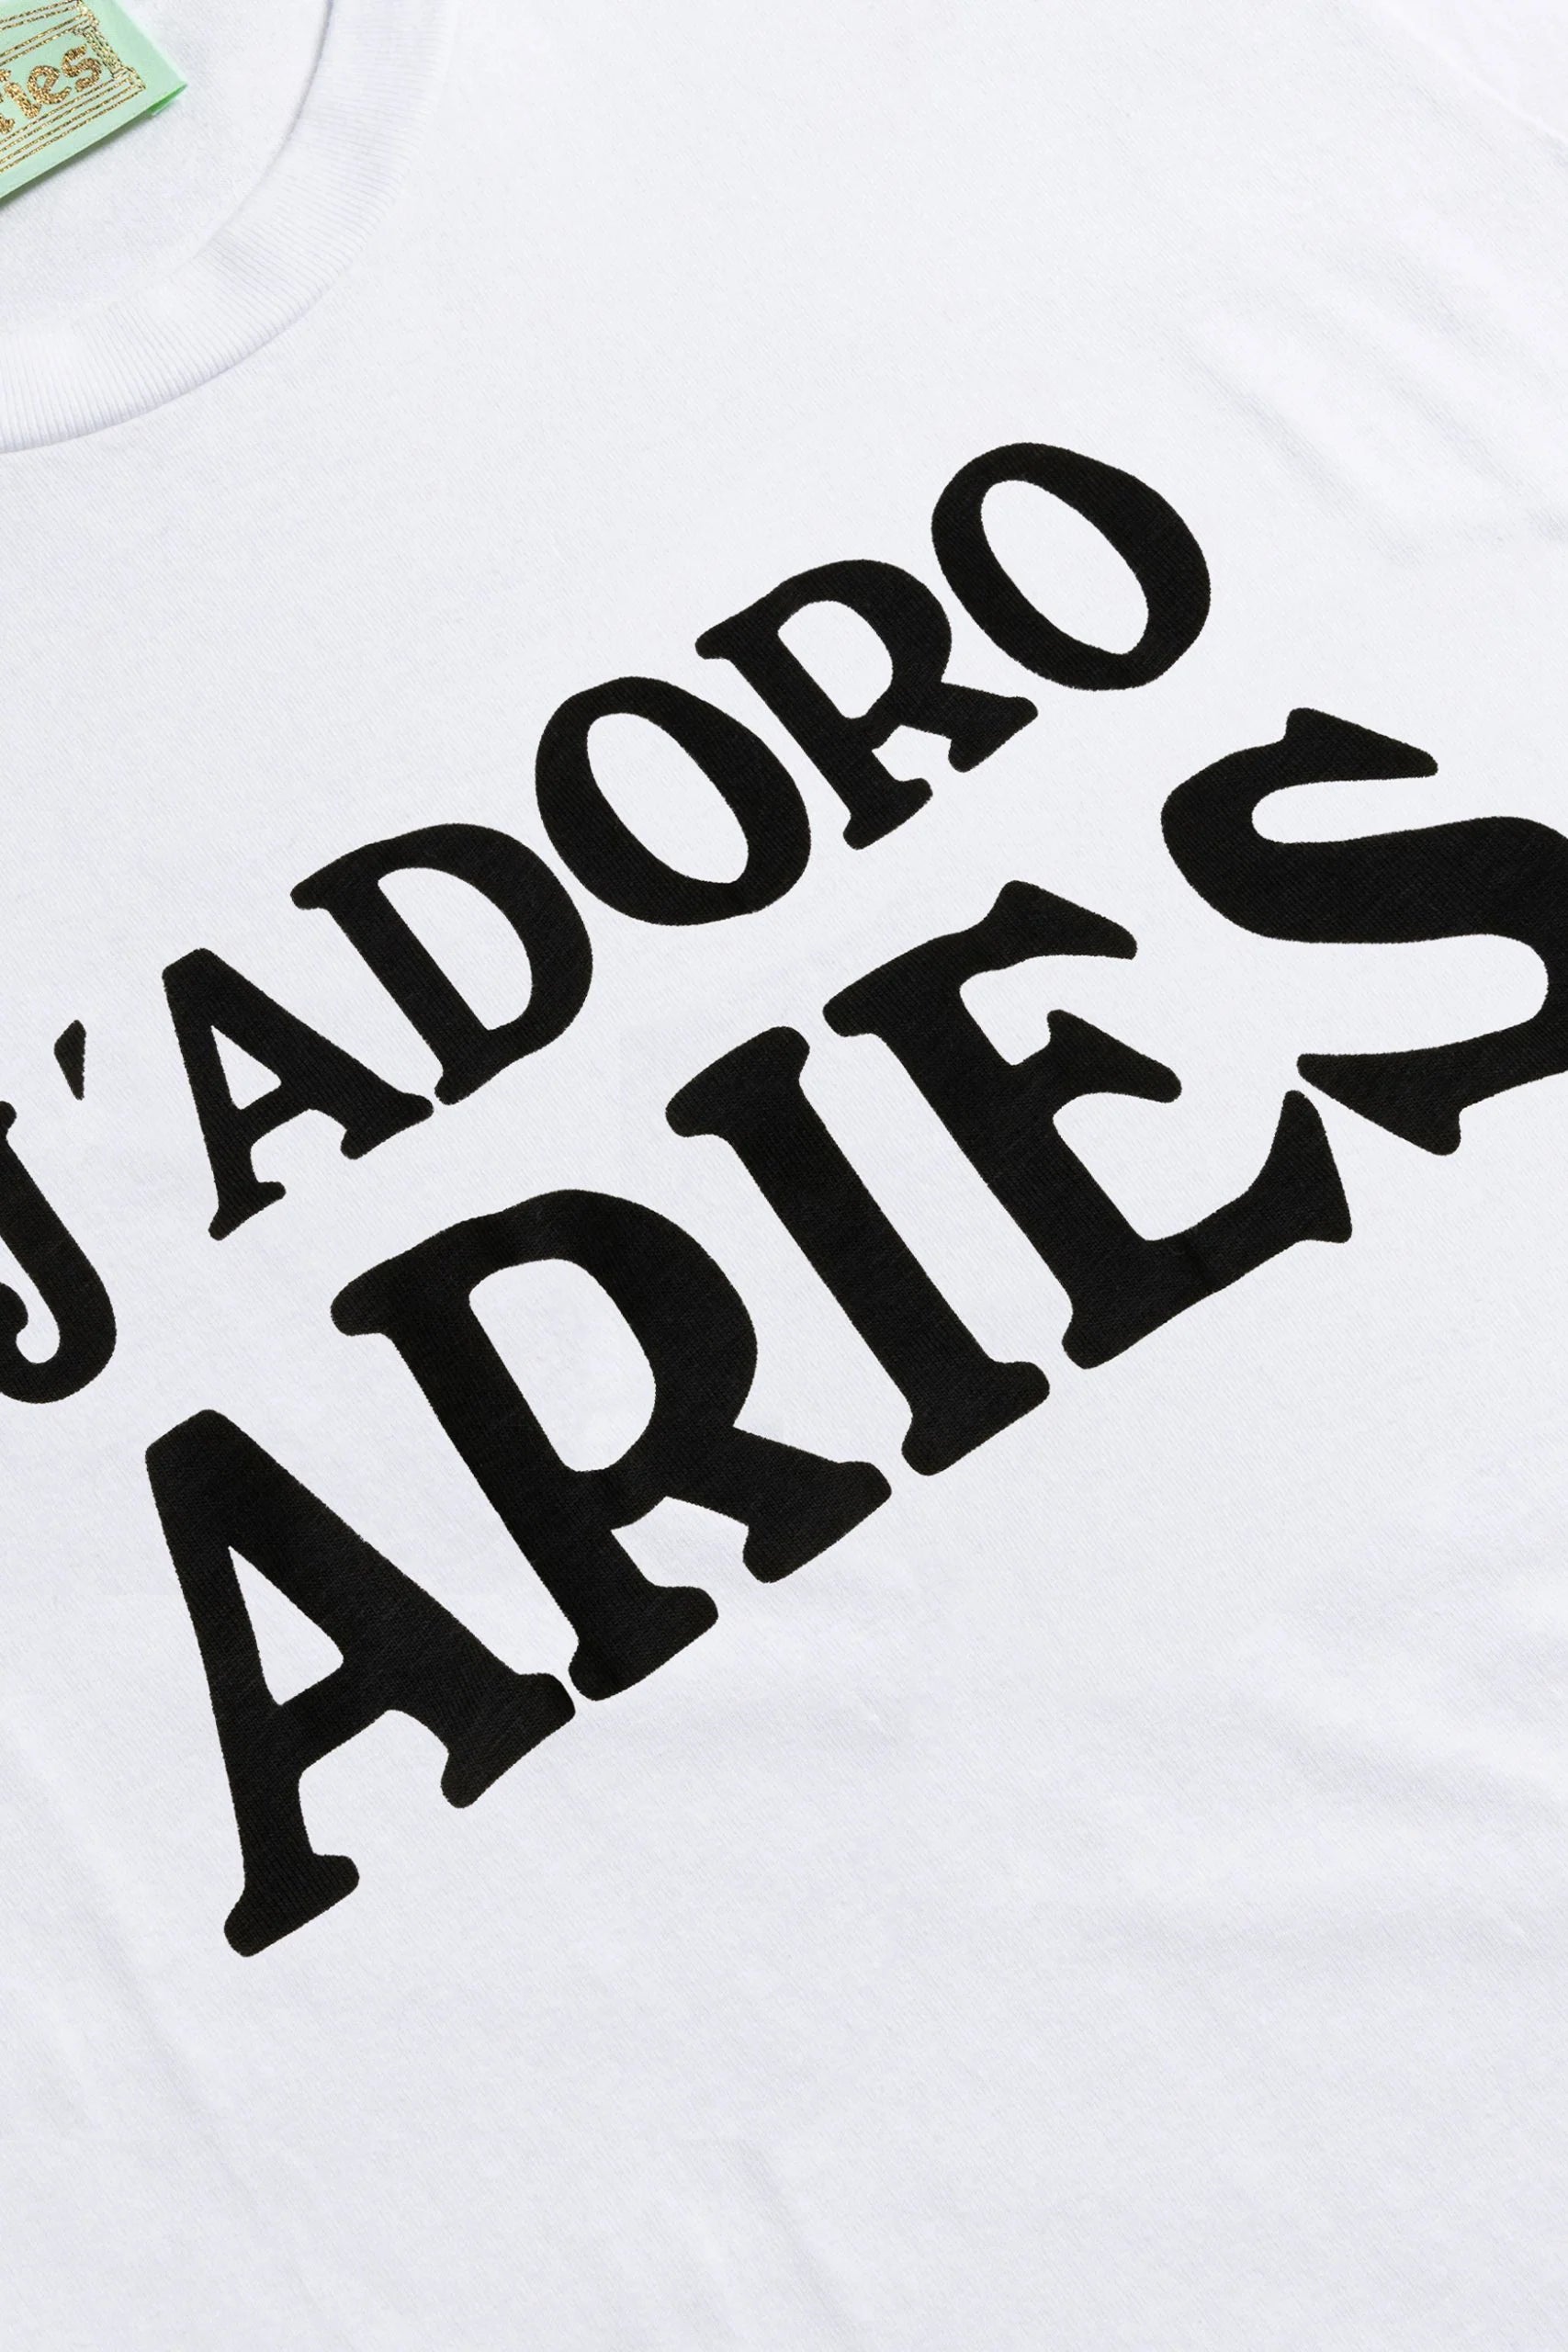 J&#39;Adoro Aries tee | White